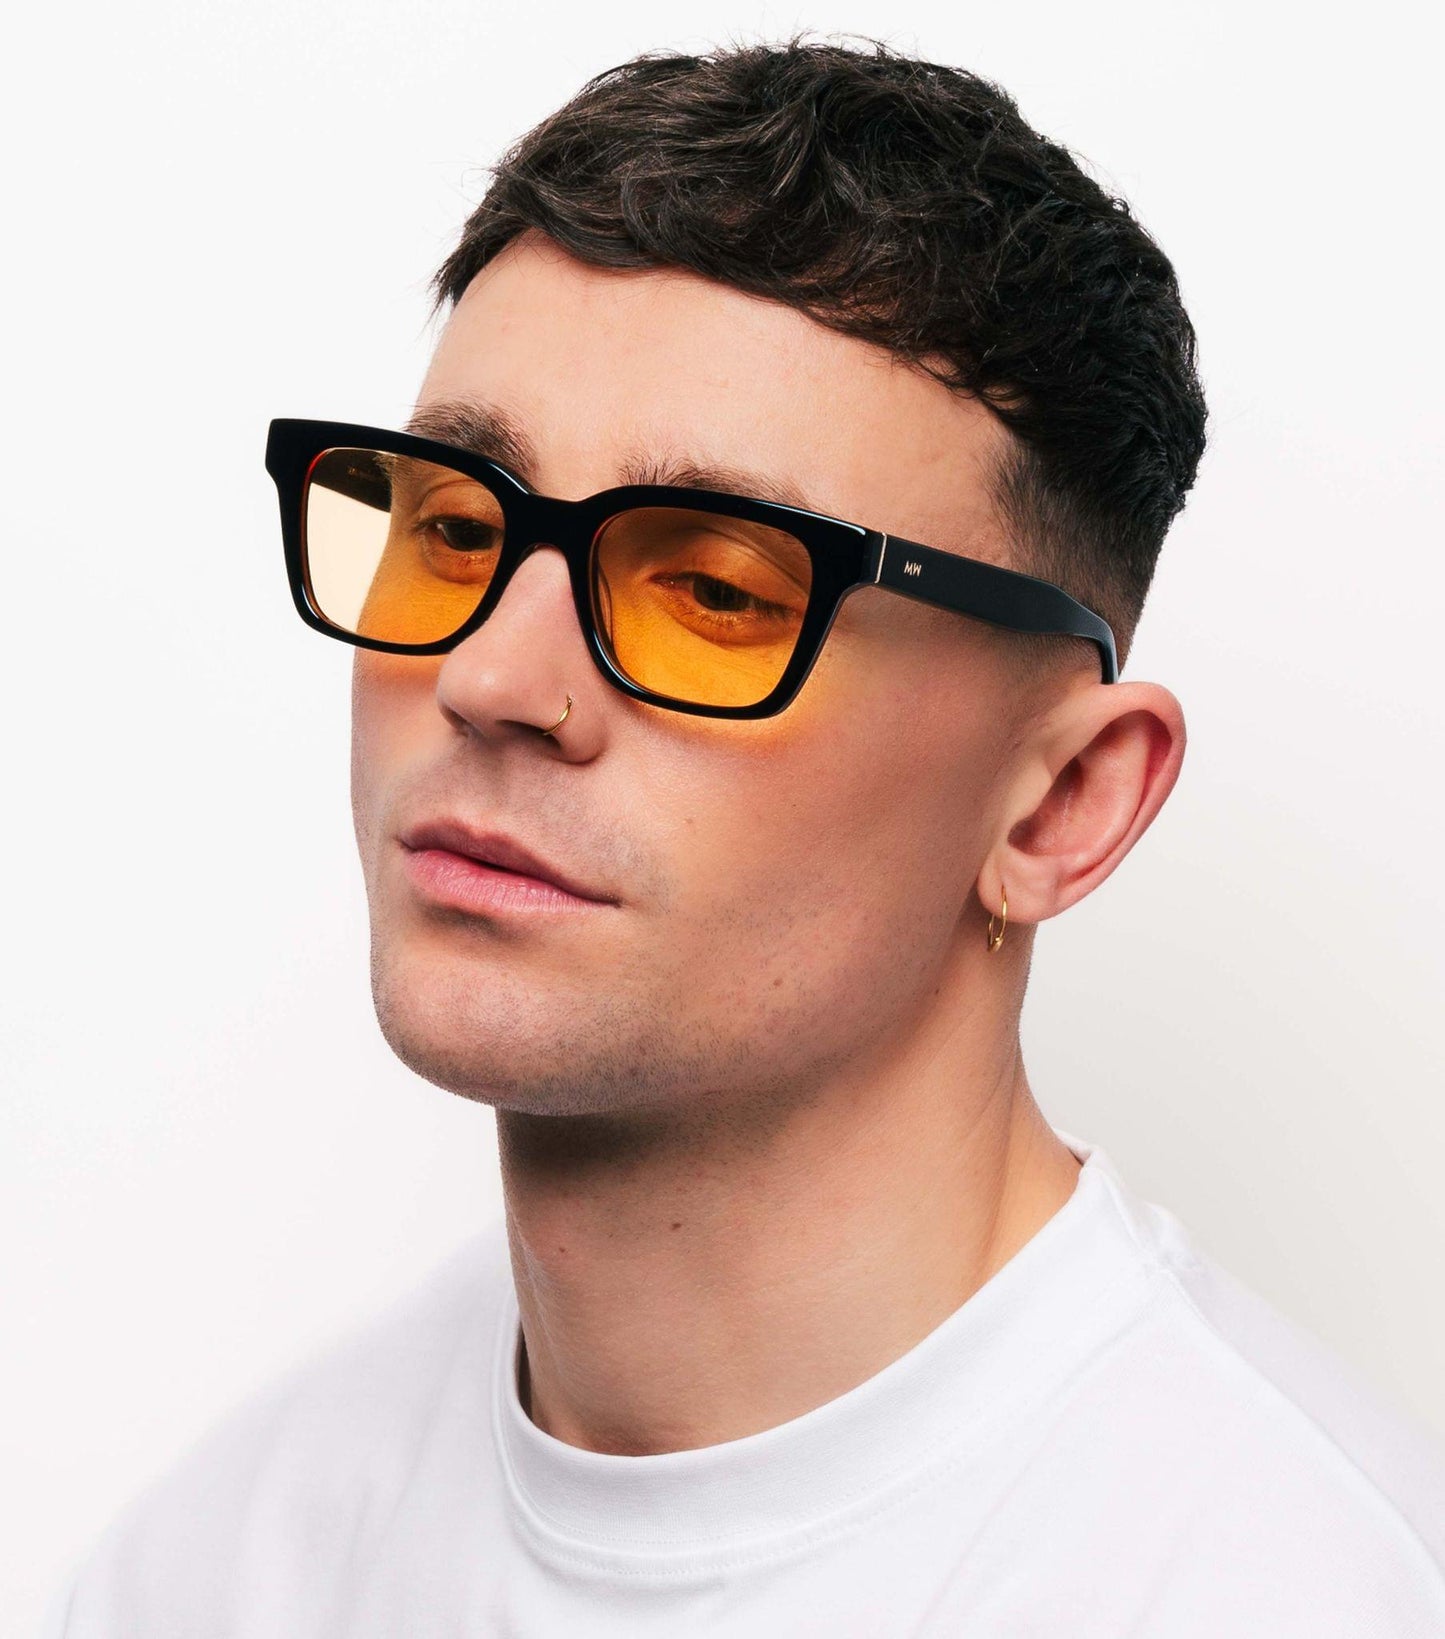 Dean, Rectangular sunglasses for men and women yellow lens UV400 protection